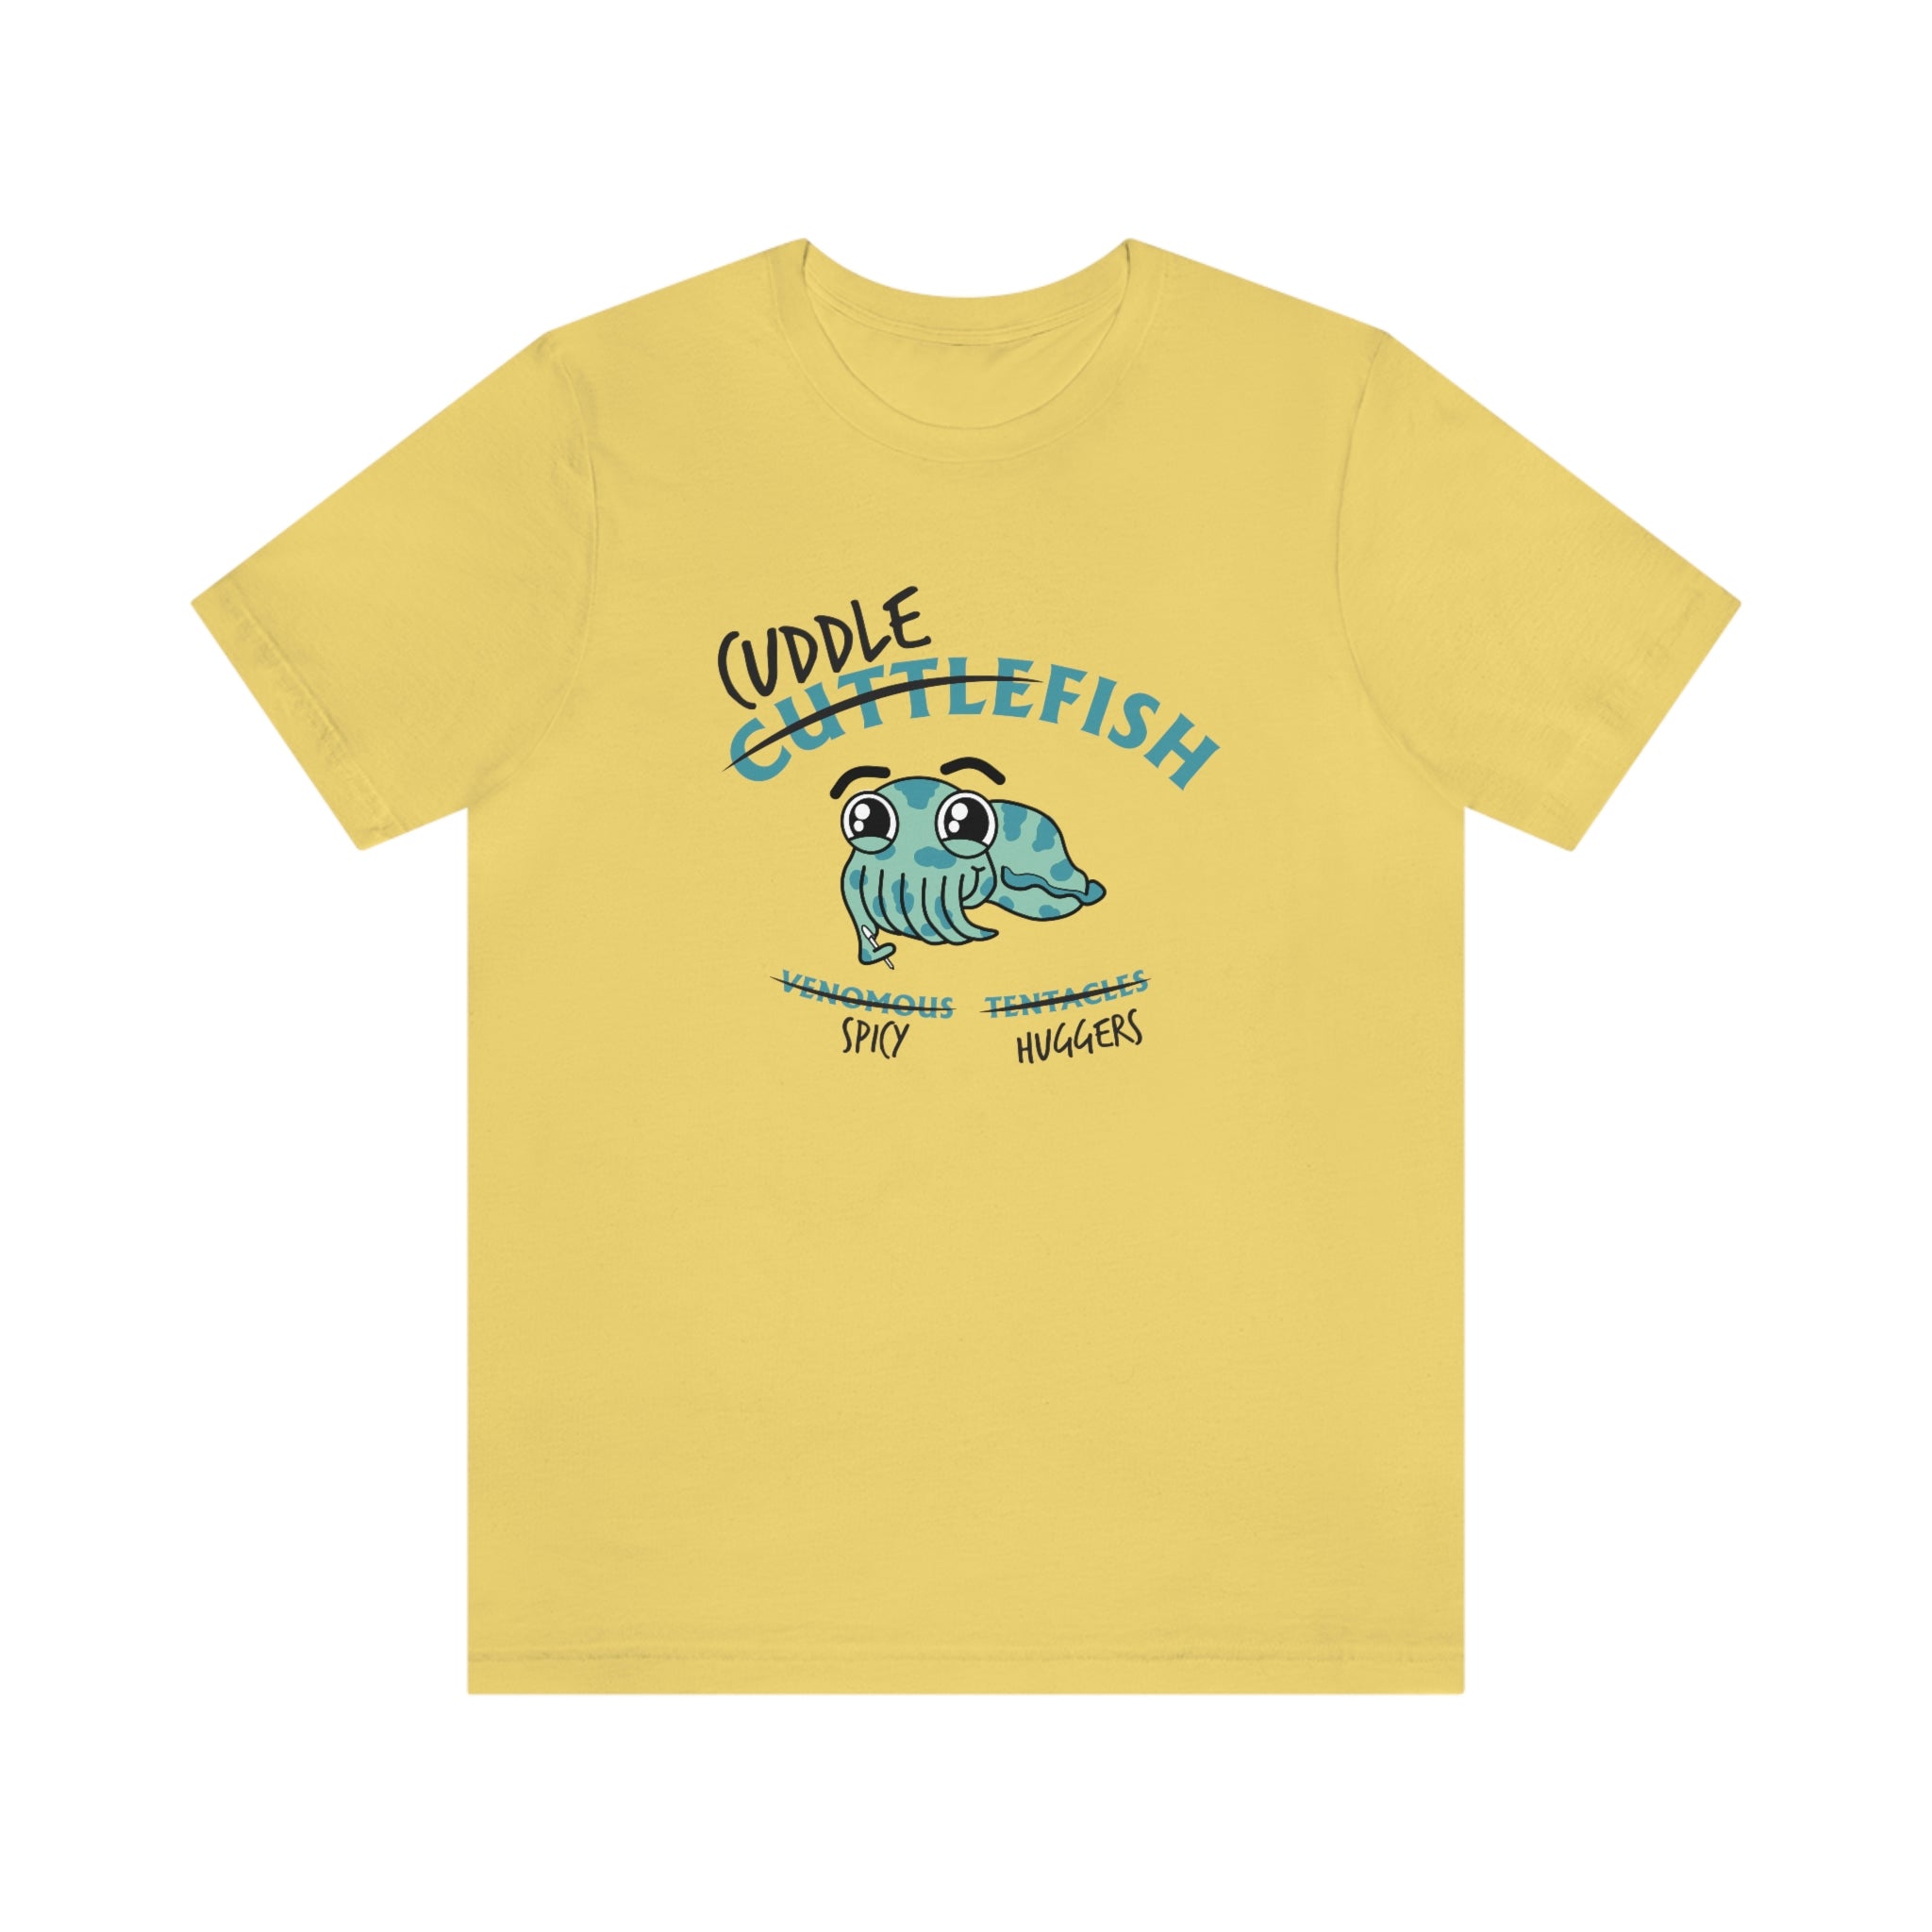 Cuddle Fish! : Unisex 100% Comfy Cotton, T-Shirt by Bella+Canvas